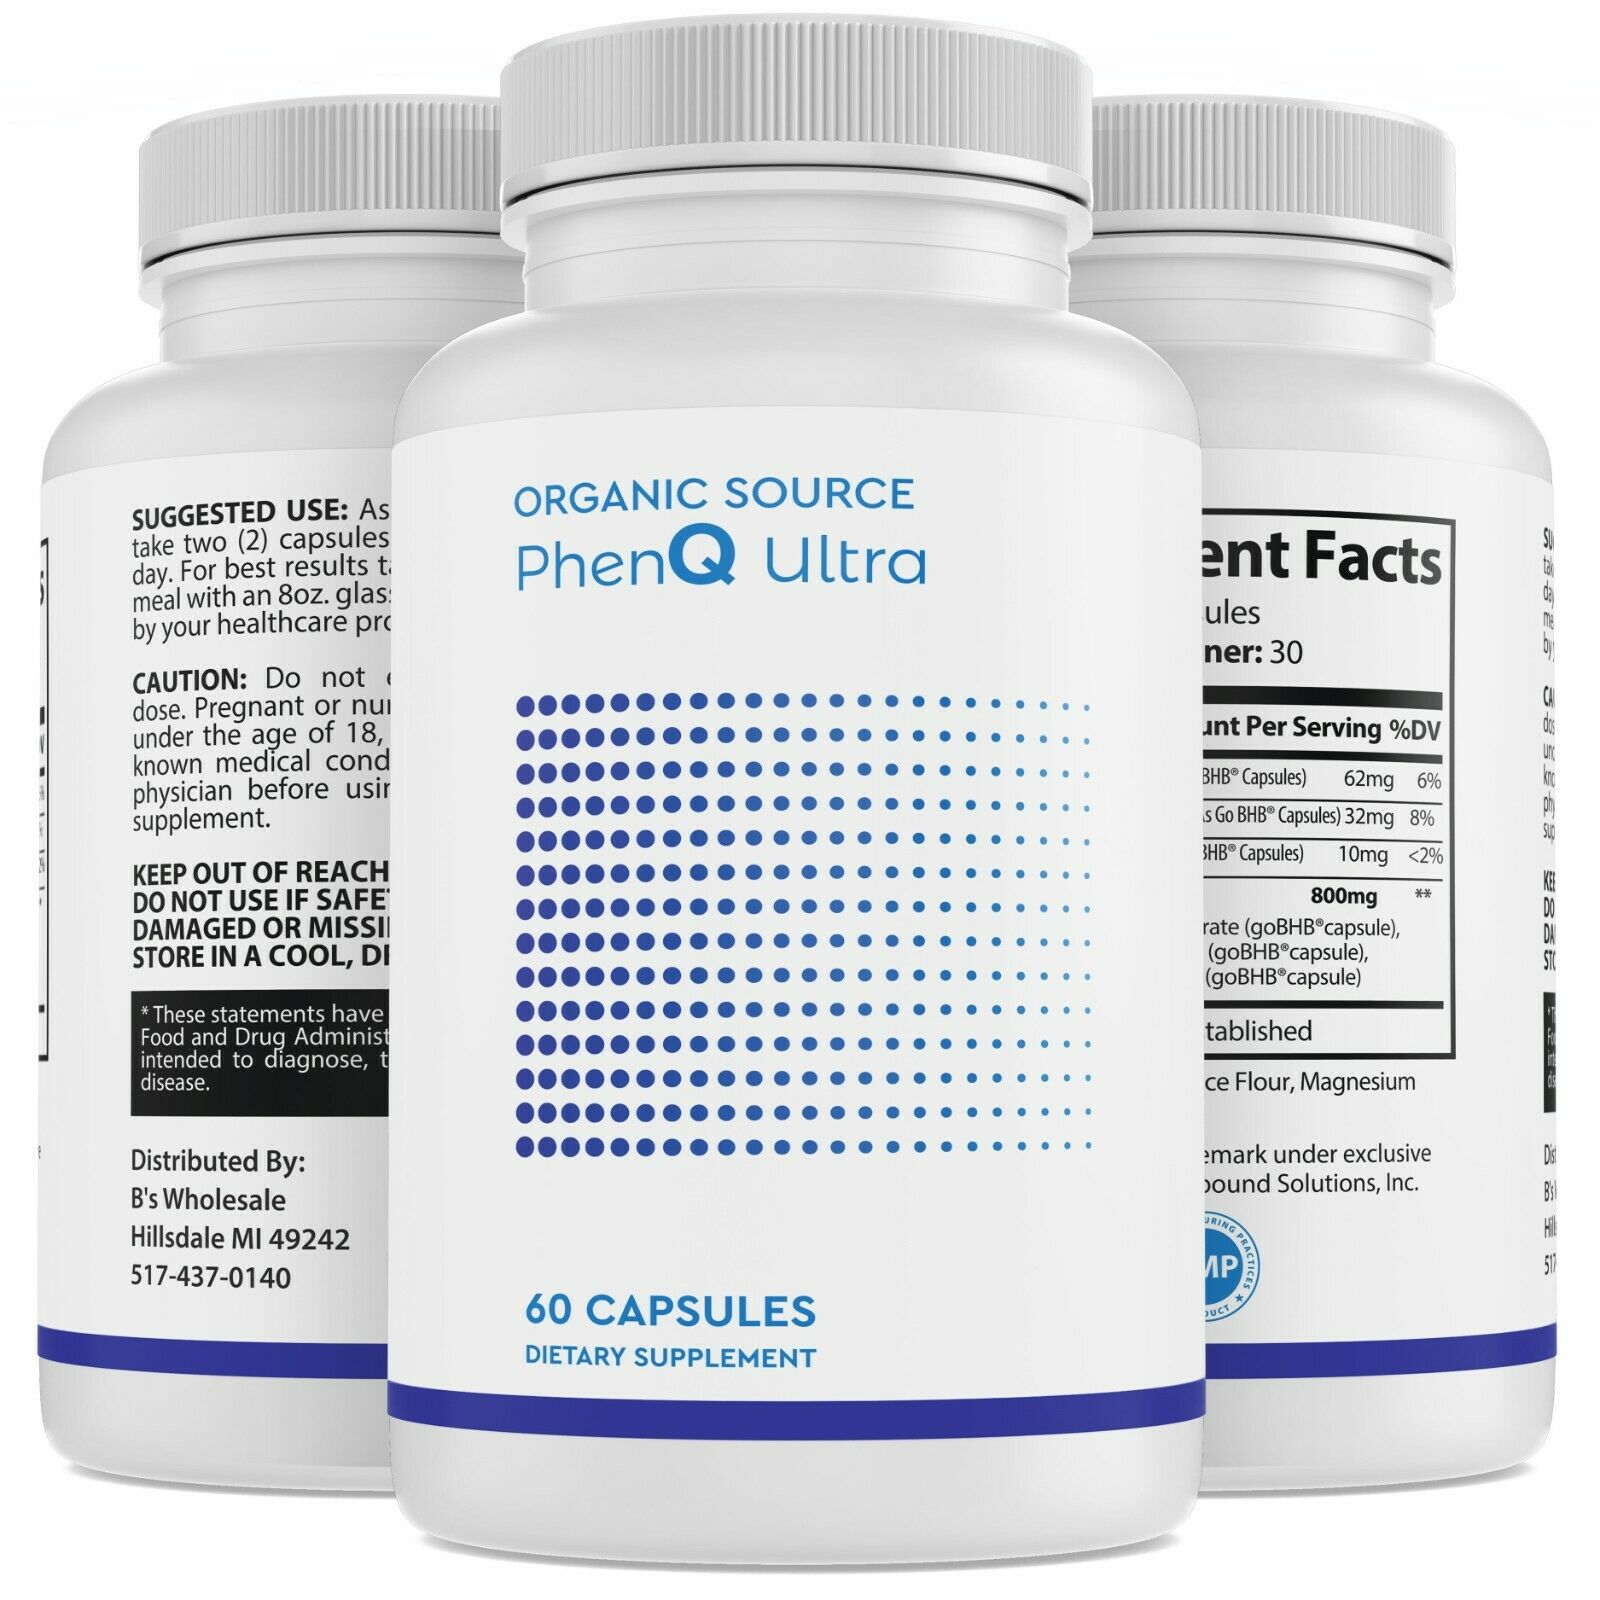 Phenq Ultra #1 Best Diet Pills - Weight Loss Burn Fat Energy Phen Q That Works